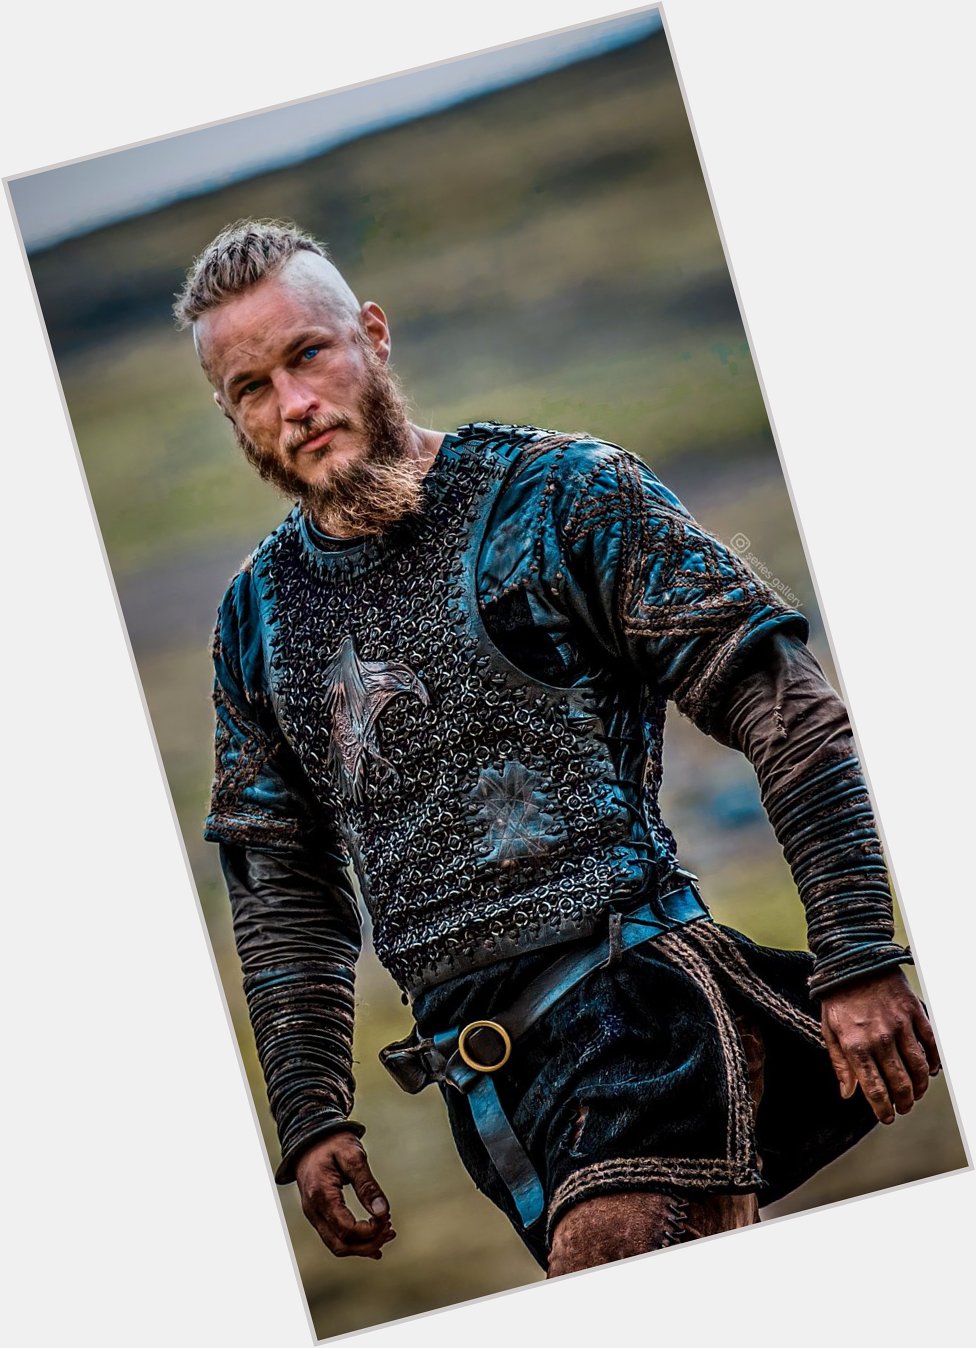 Happy Bday Travis fimmel 

aka King Ragnar       